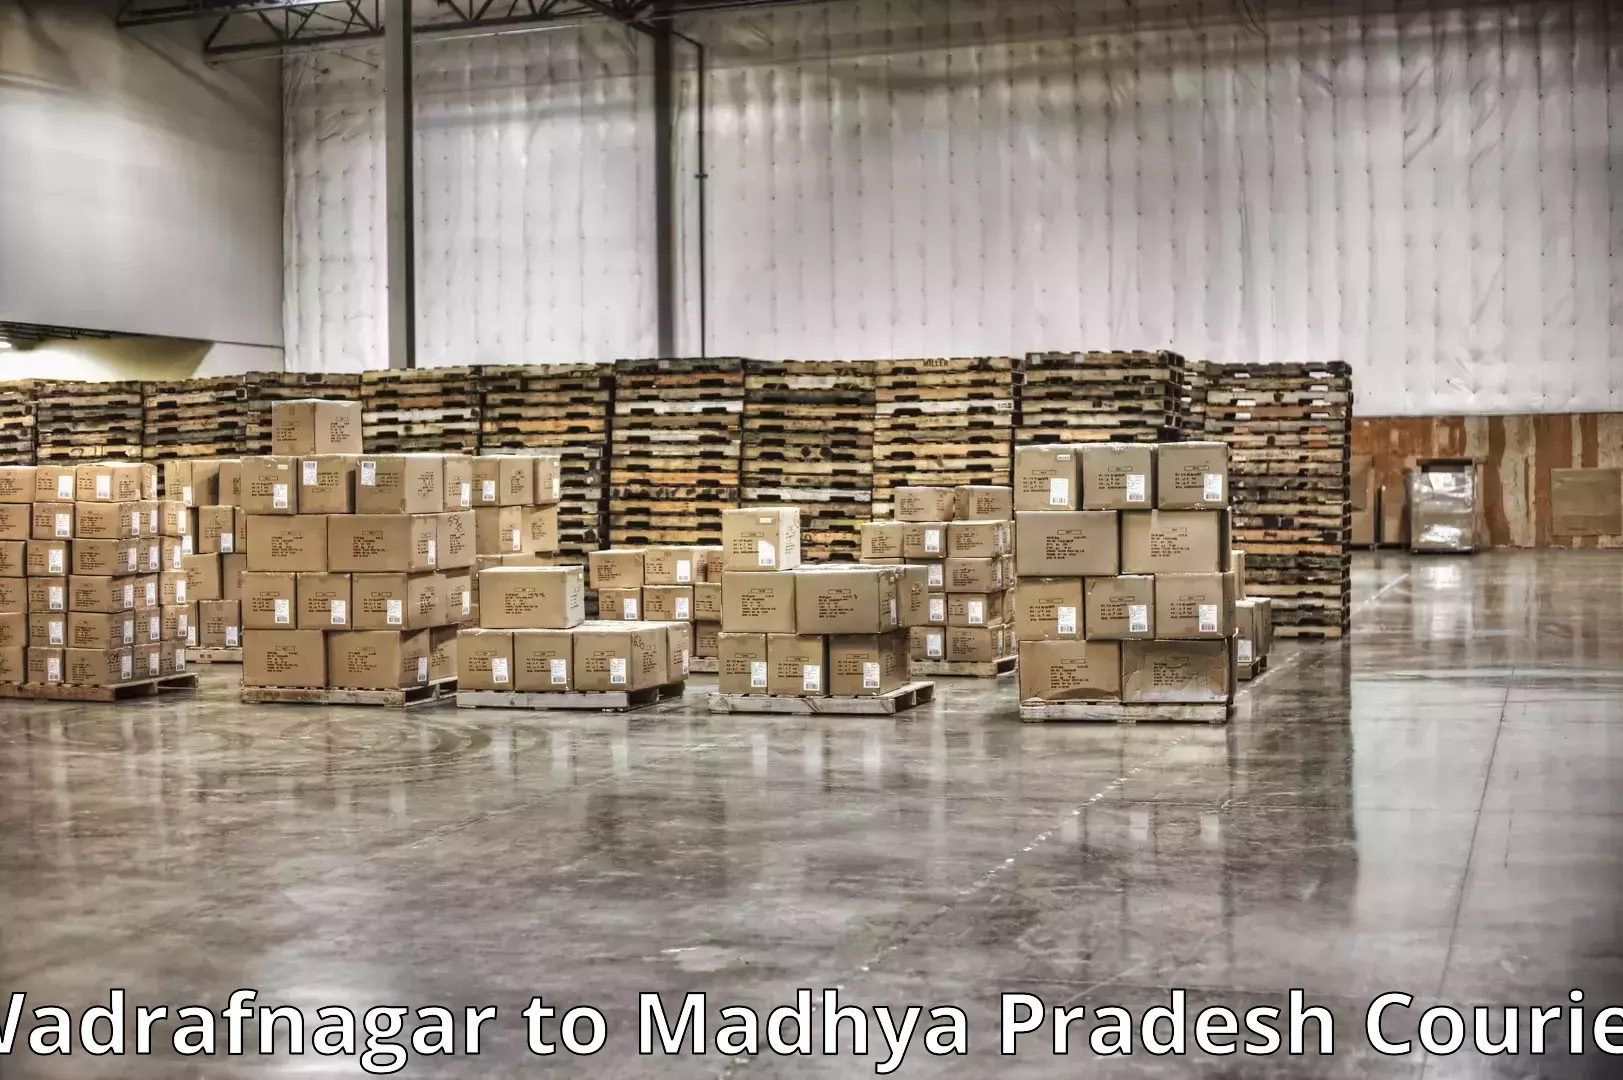 Skilled movers Wadrafnagar to Indore